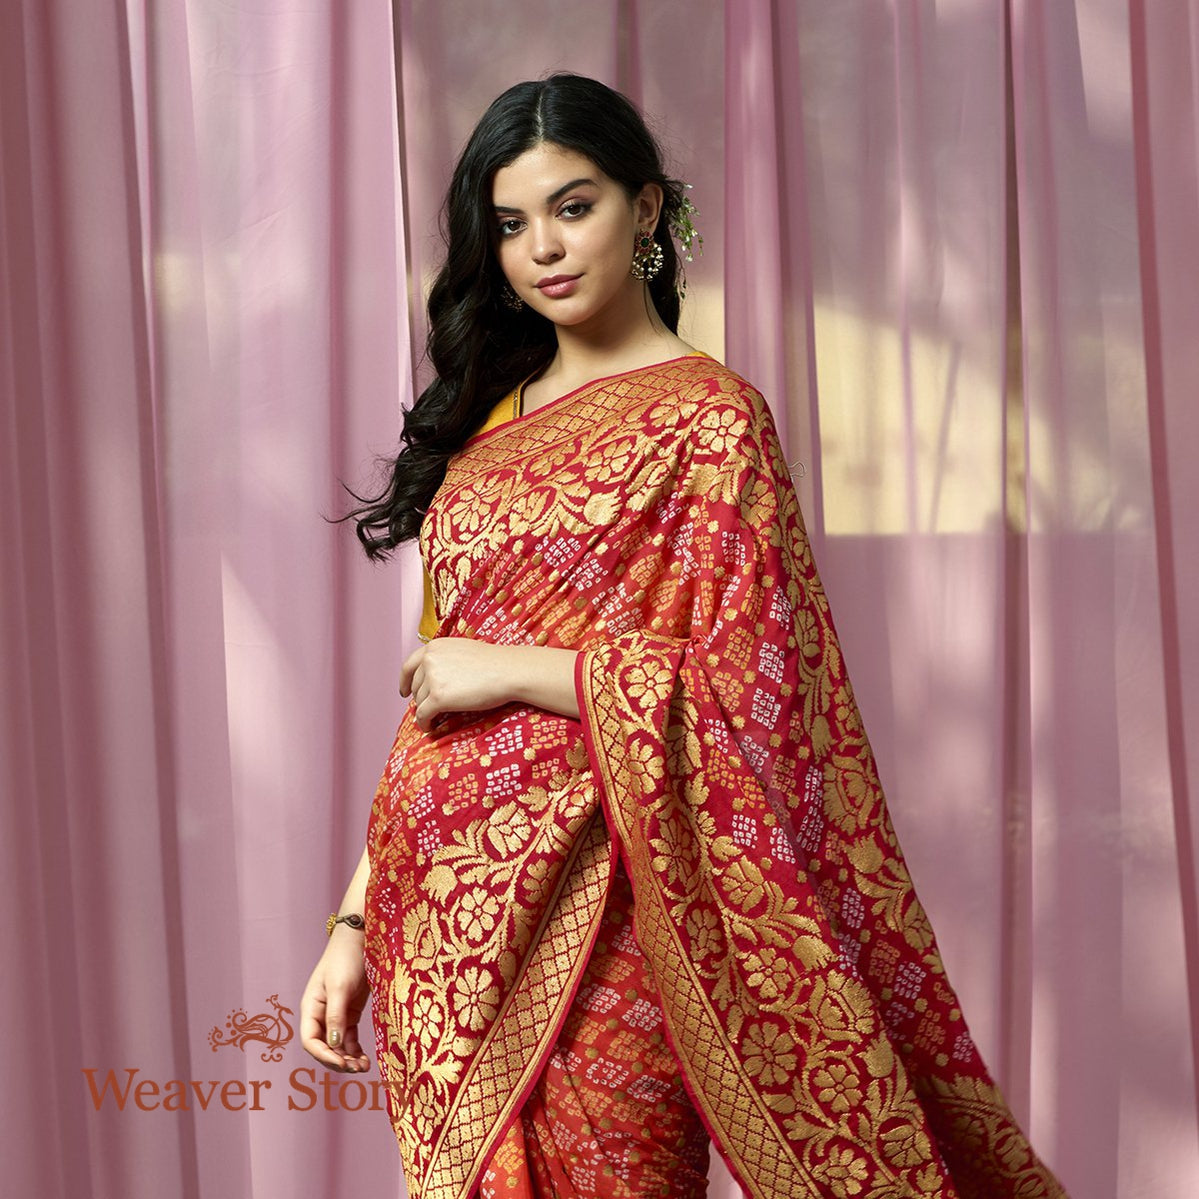 Stunning Red Cotton Linen Handwoven in Bandhini Style Saree - Loomfolks